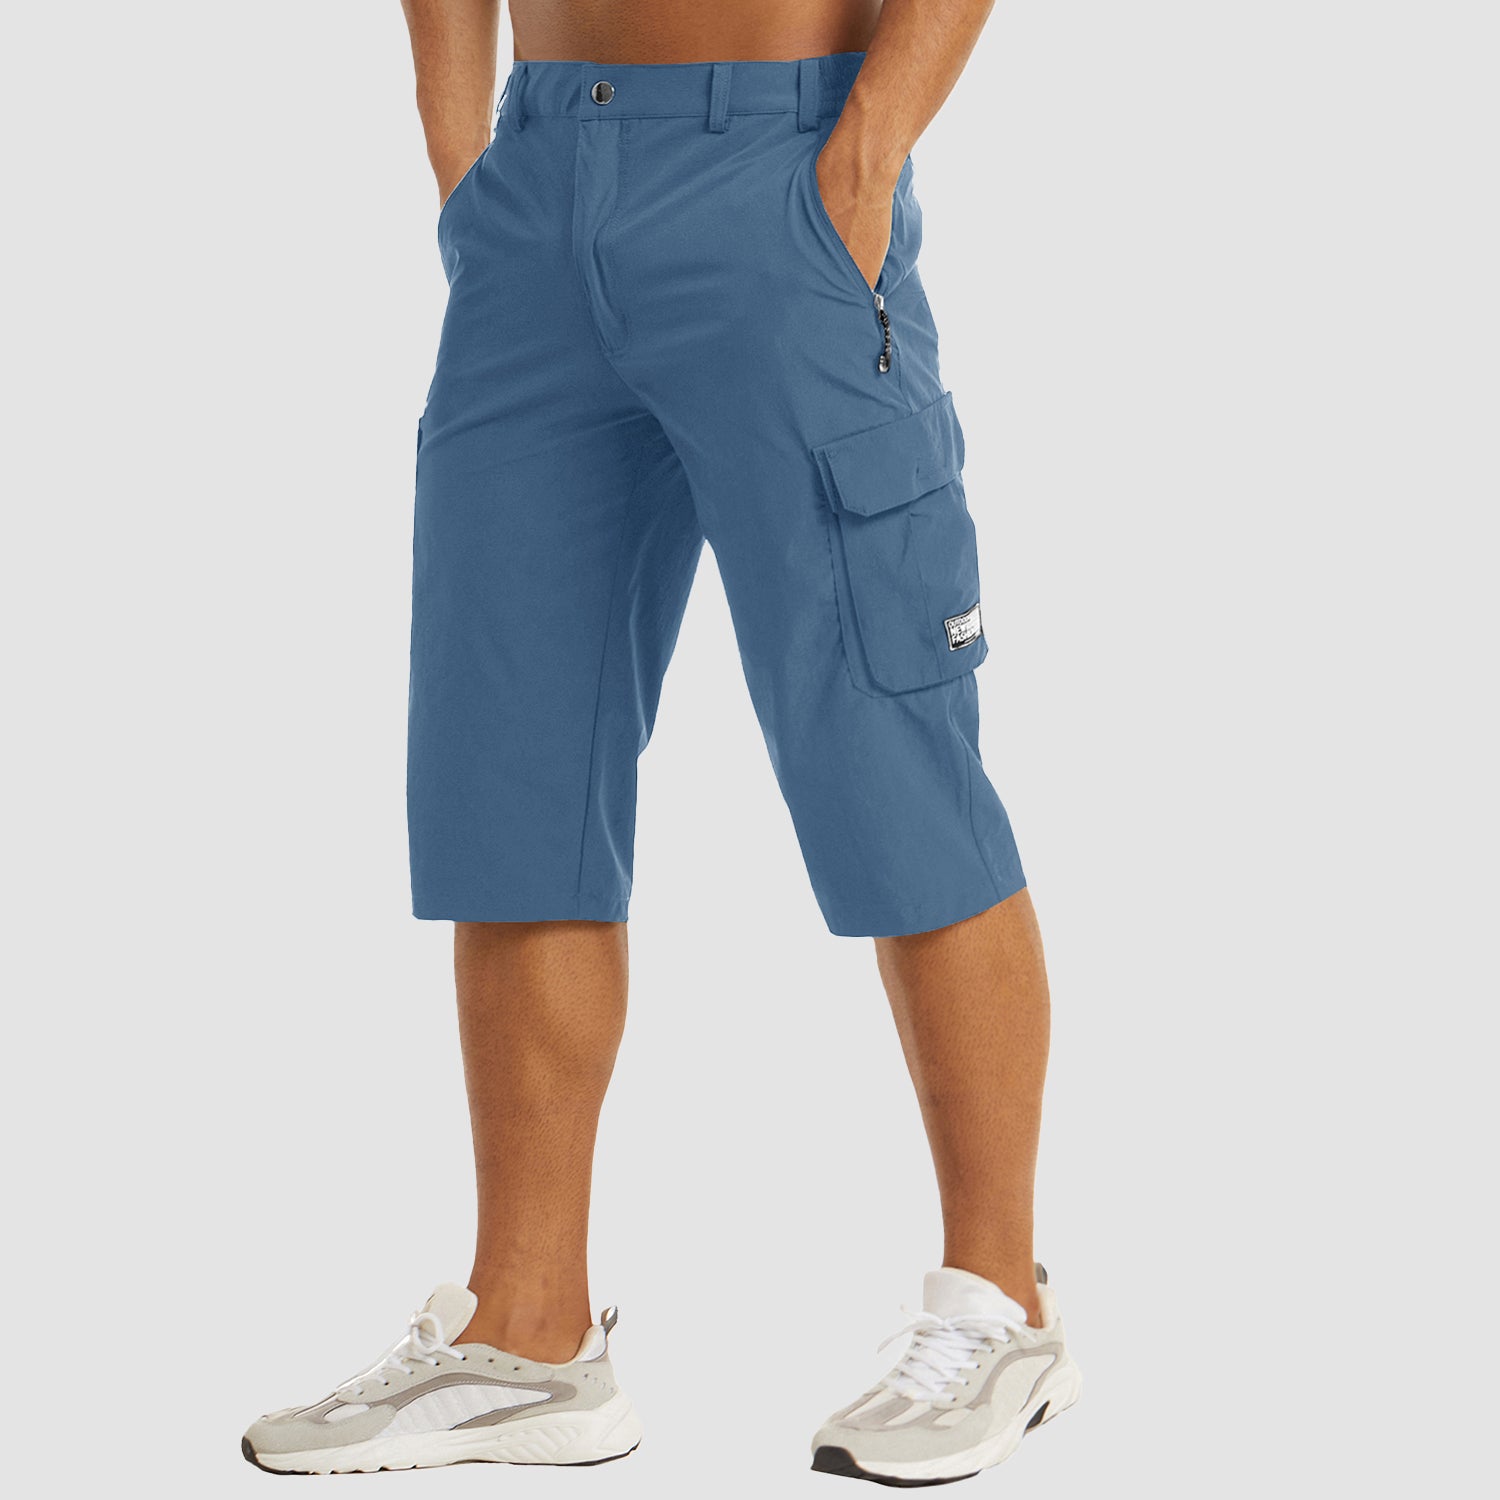 Men Cargo Shorts Clearance,TIANEK Fashion Multi-Pocket Bermuda Shorts  Knee-Length Breathable Classic-Fit Hiking Blue Sweatpants Hiking Shorts for  Big